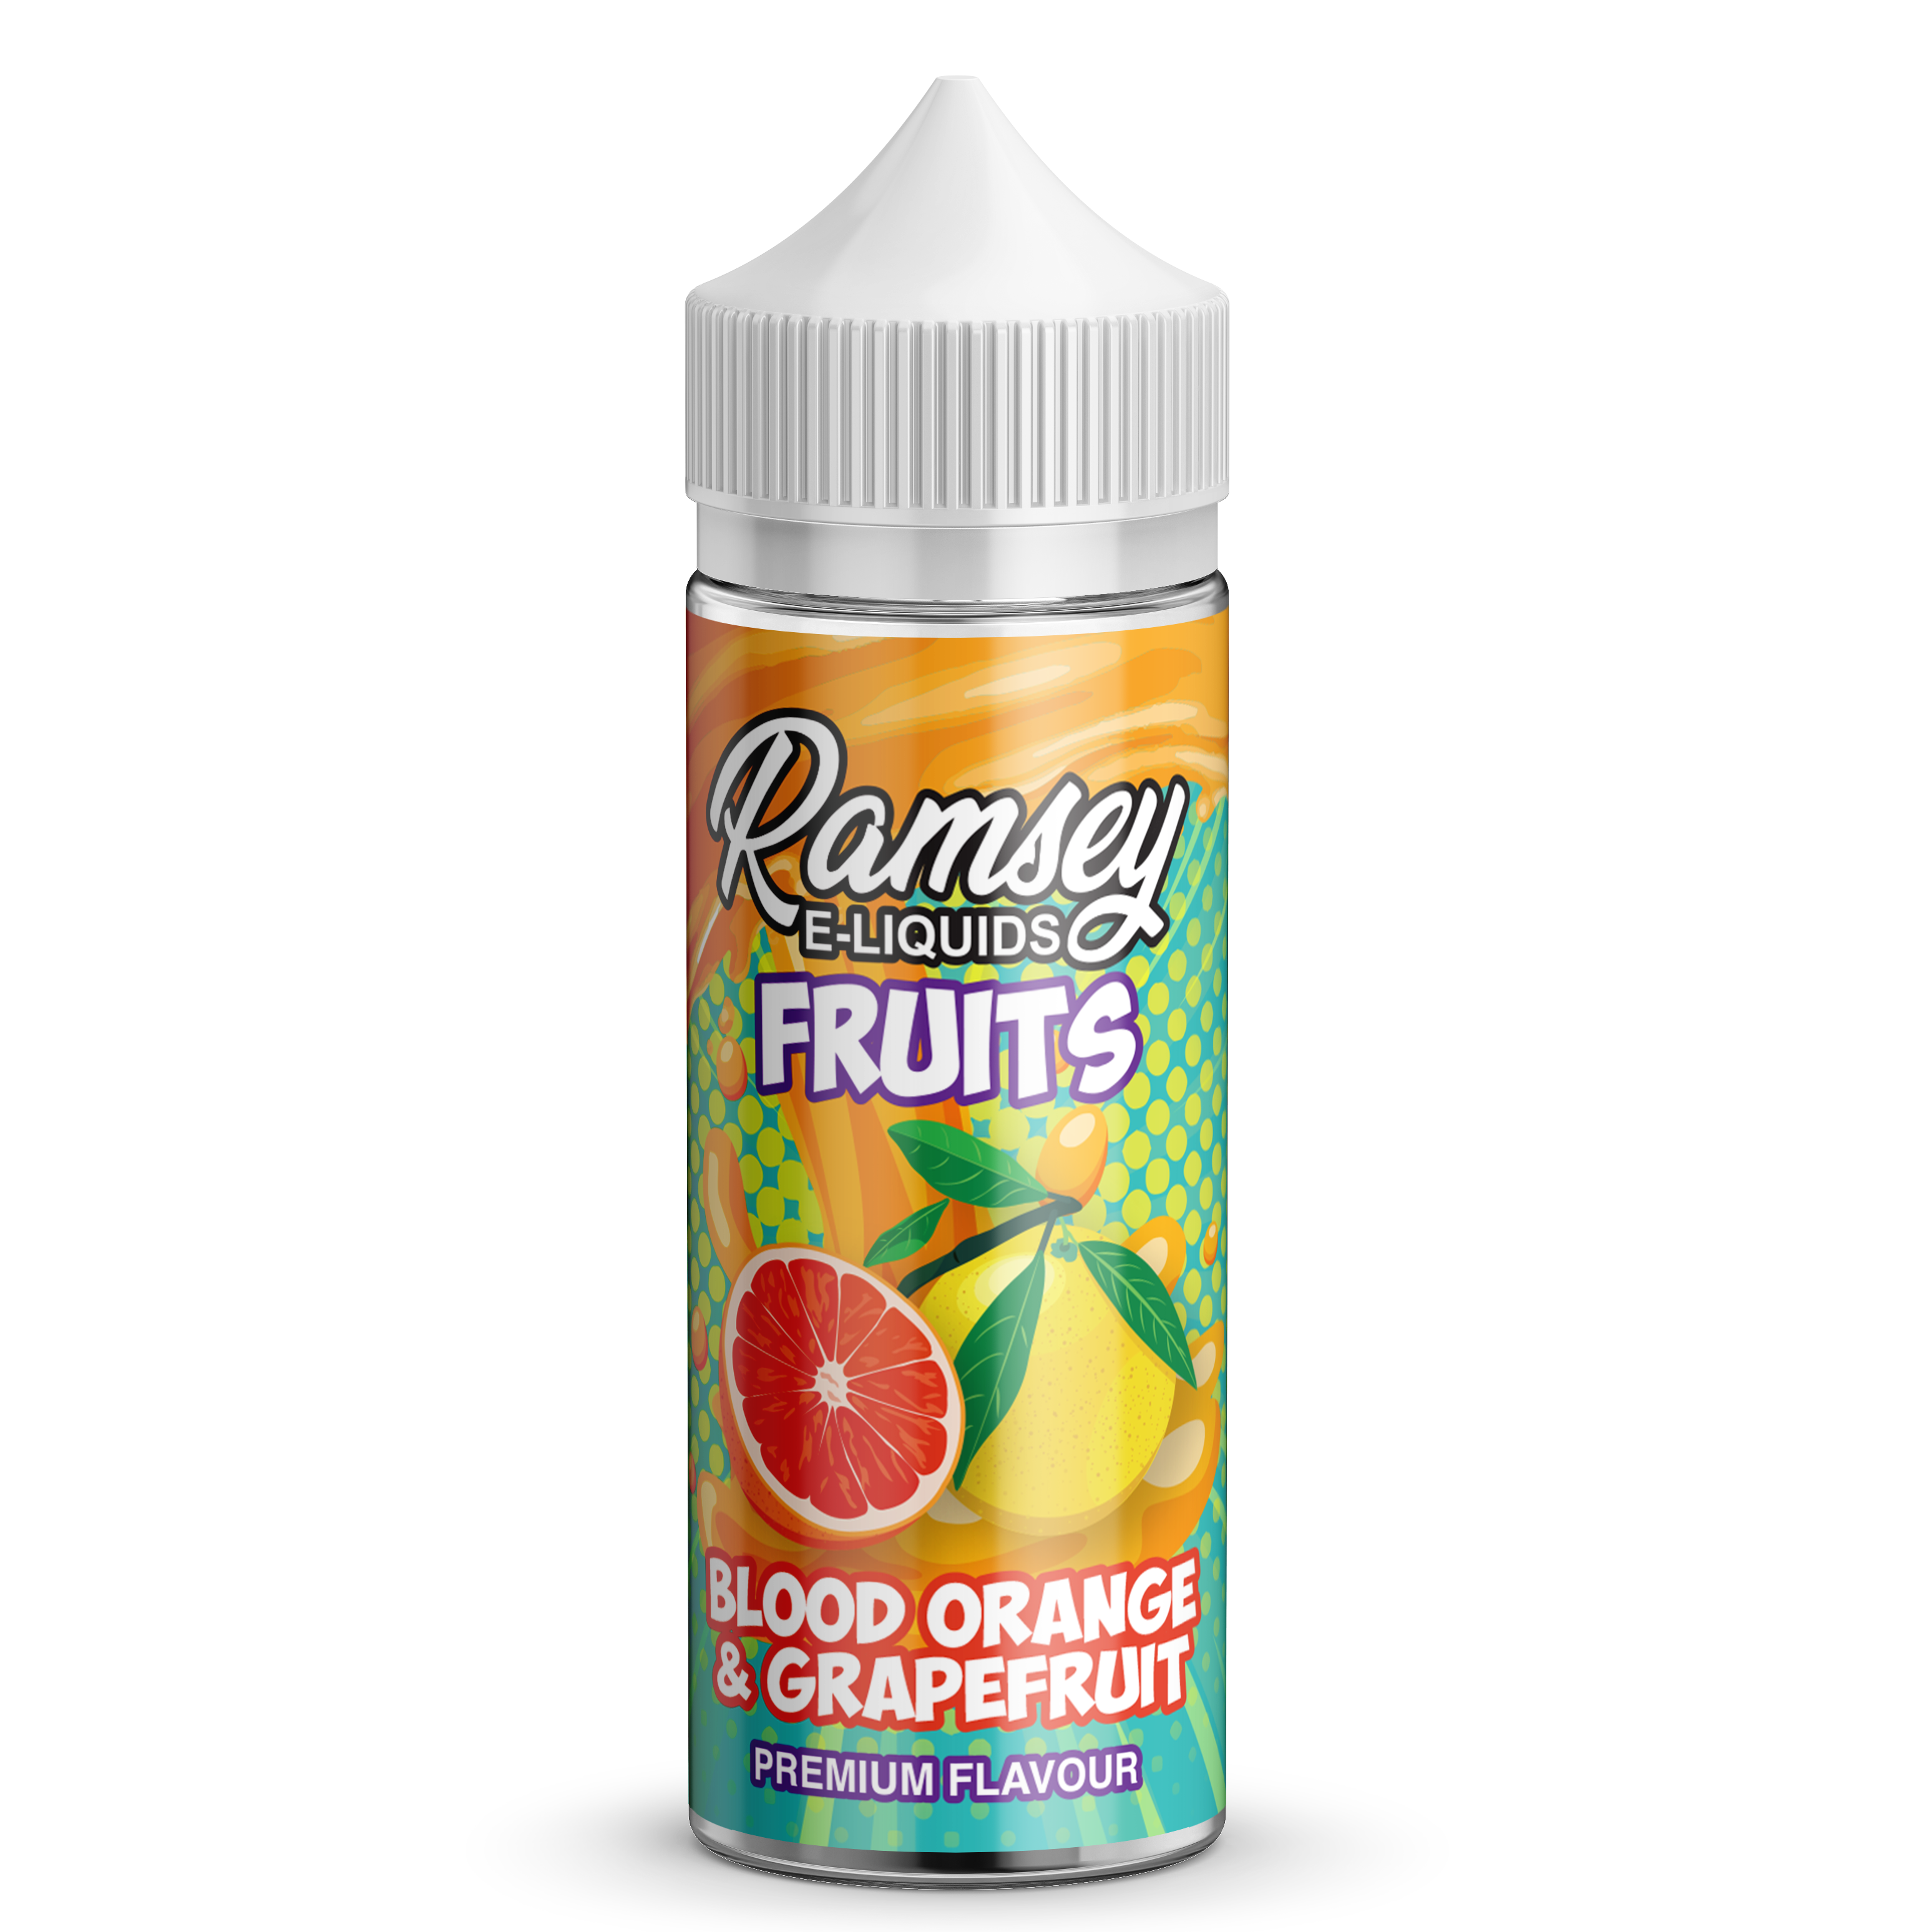 Ramsey E-Liquids Fruits Blood Orange Grapefruit 0mg 100ml Shortfill E-Liquid